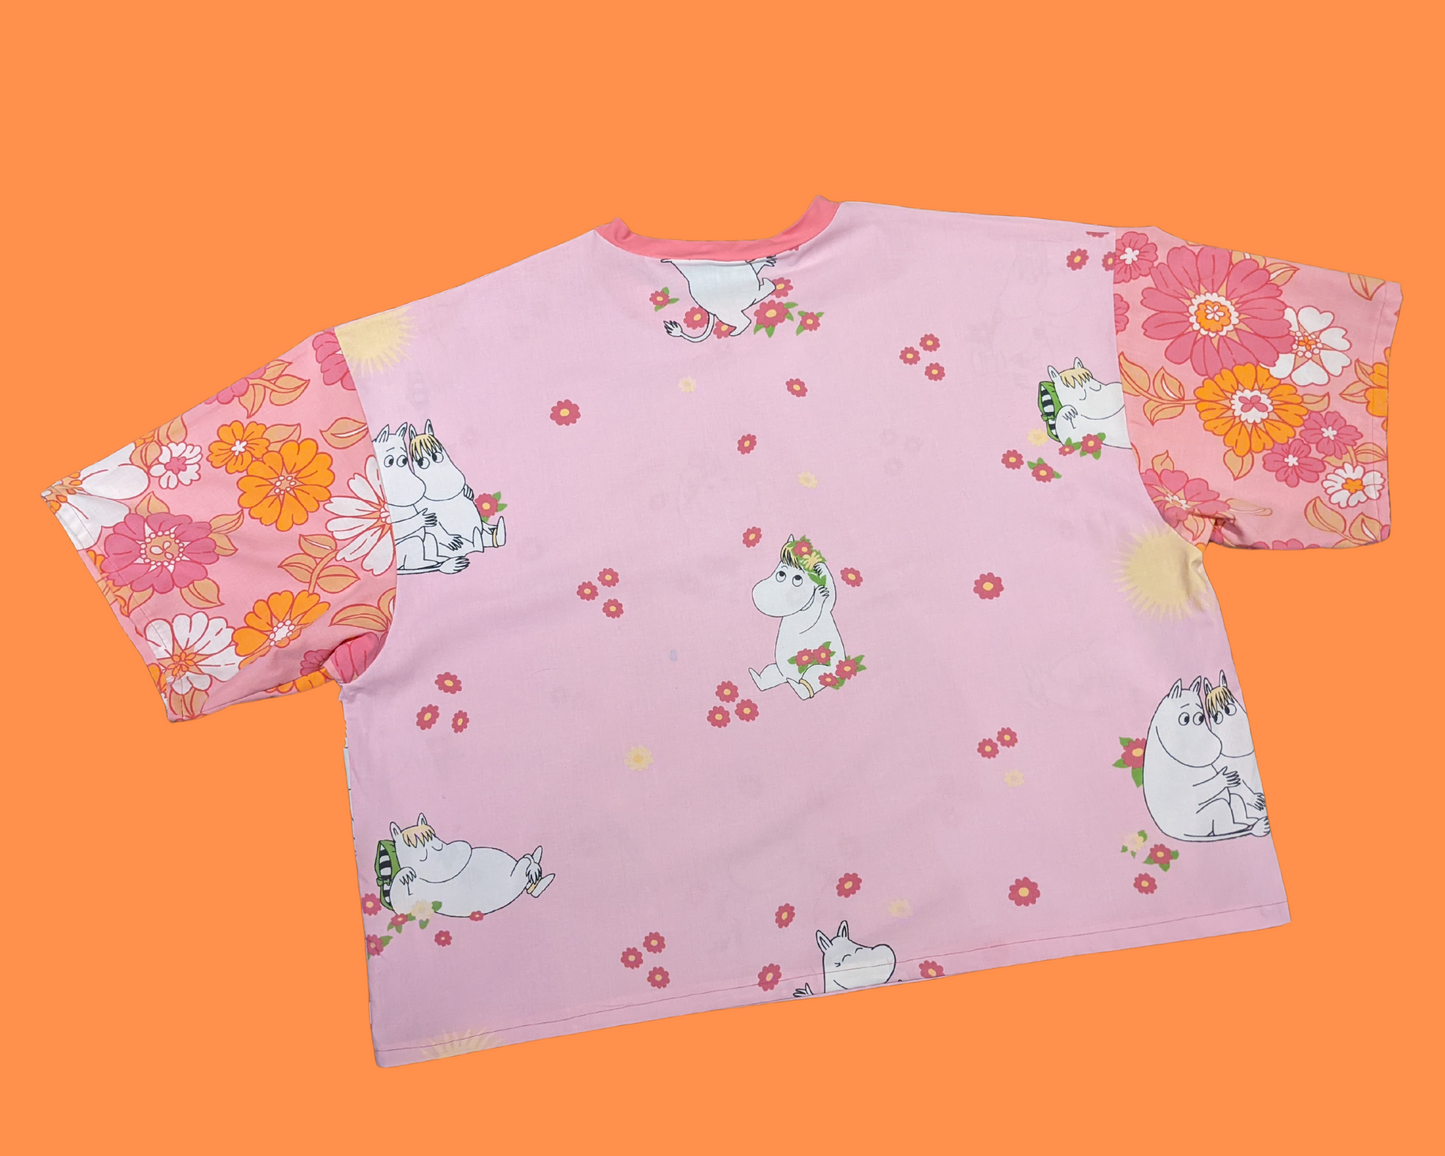 Fait à la main, Upcycled The Moomins Vintage 1990's Bedsheet + Orange et Rose Floral Fabric T-Shirt Oversized XL